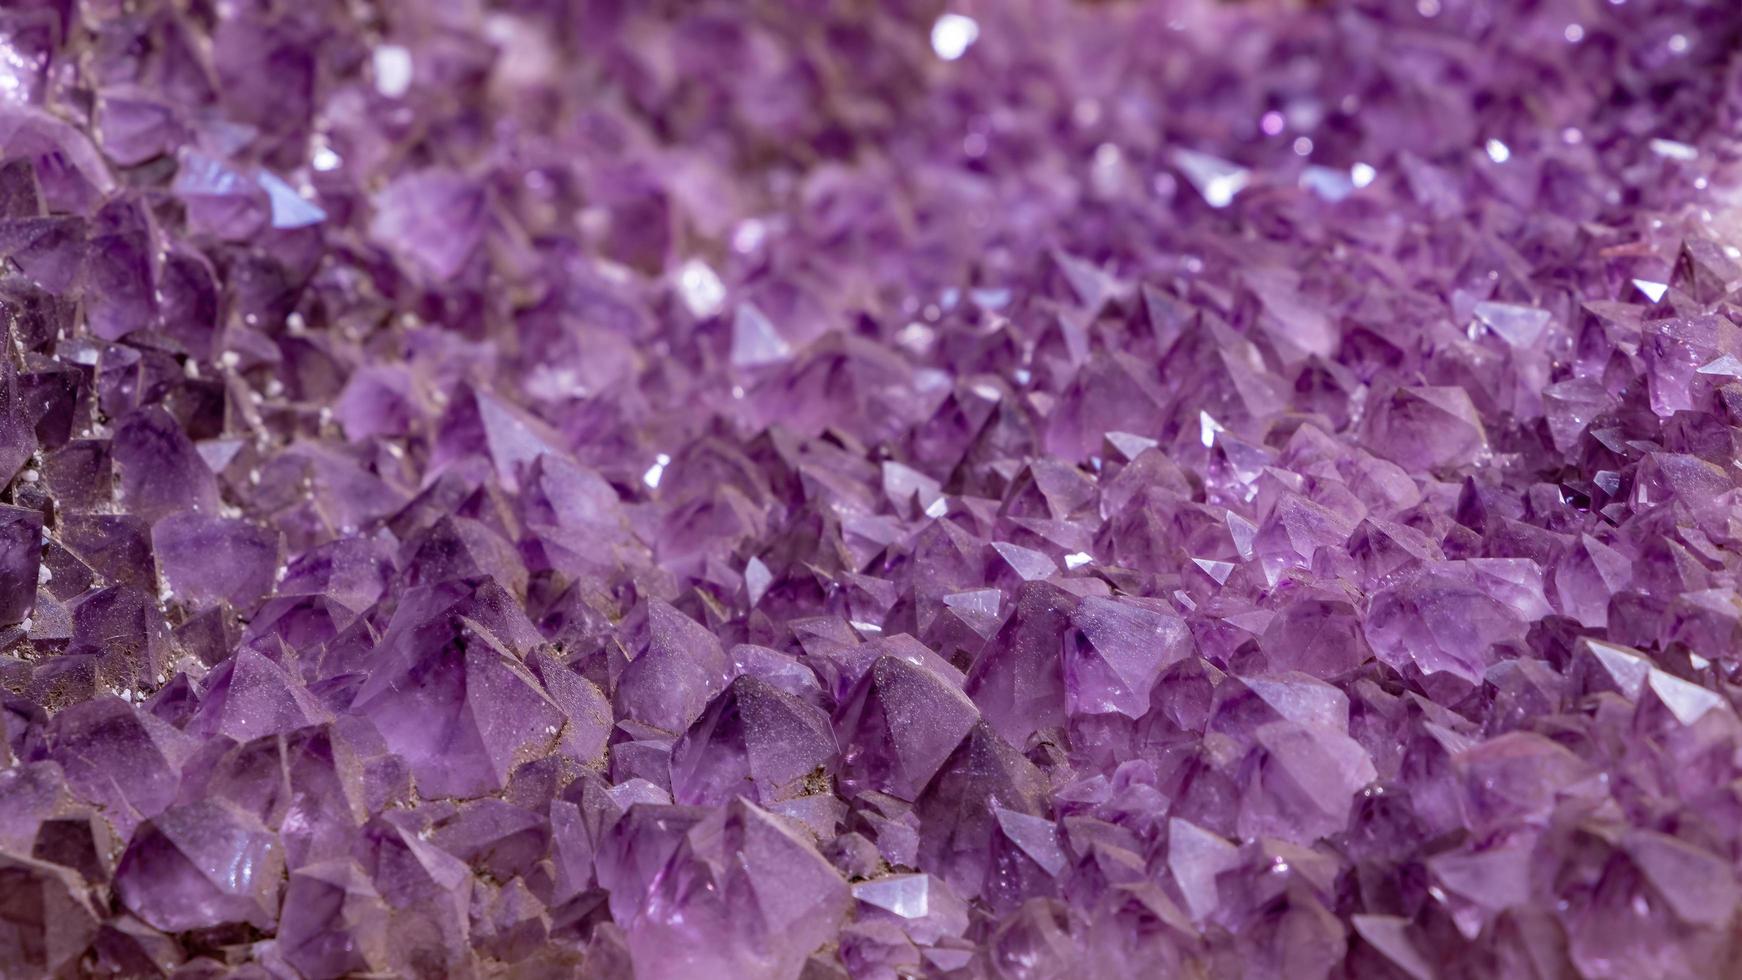 goiania, goias, brasil, 2019 - gran bloque de cristales púrpuras foto